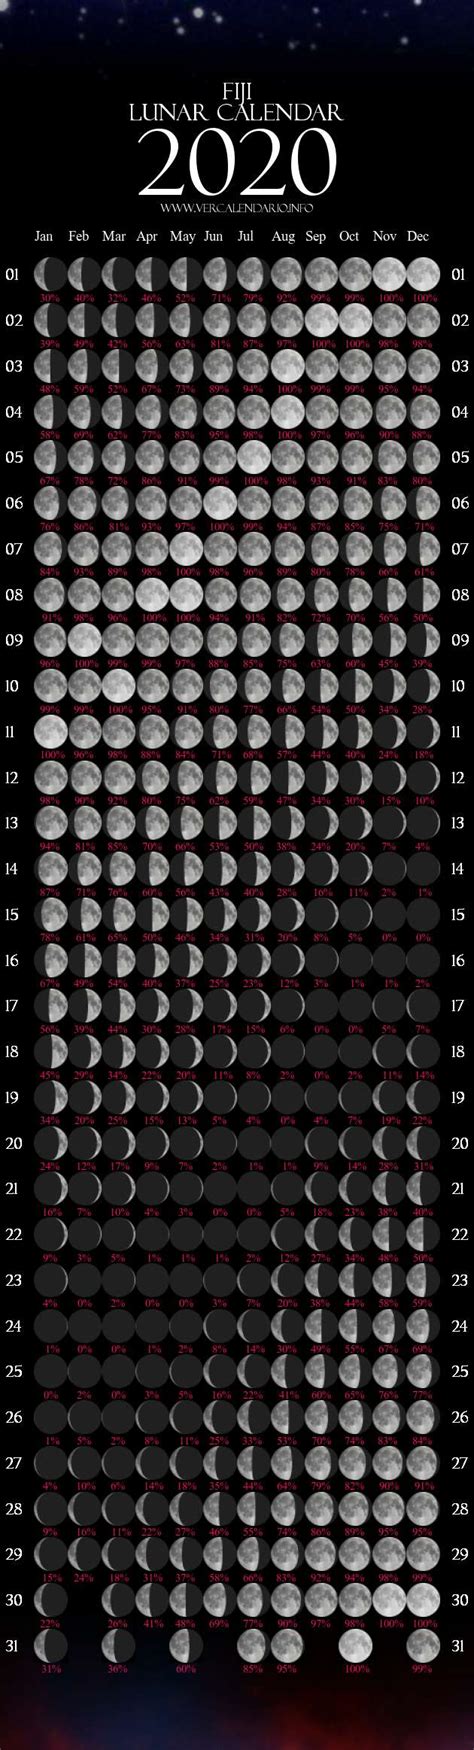 Lunar Calendar 2020 (Fiji)